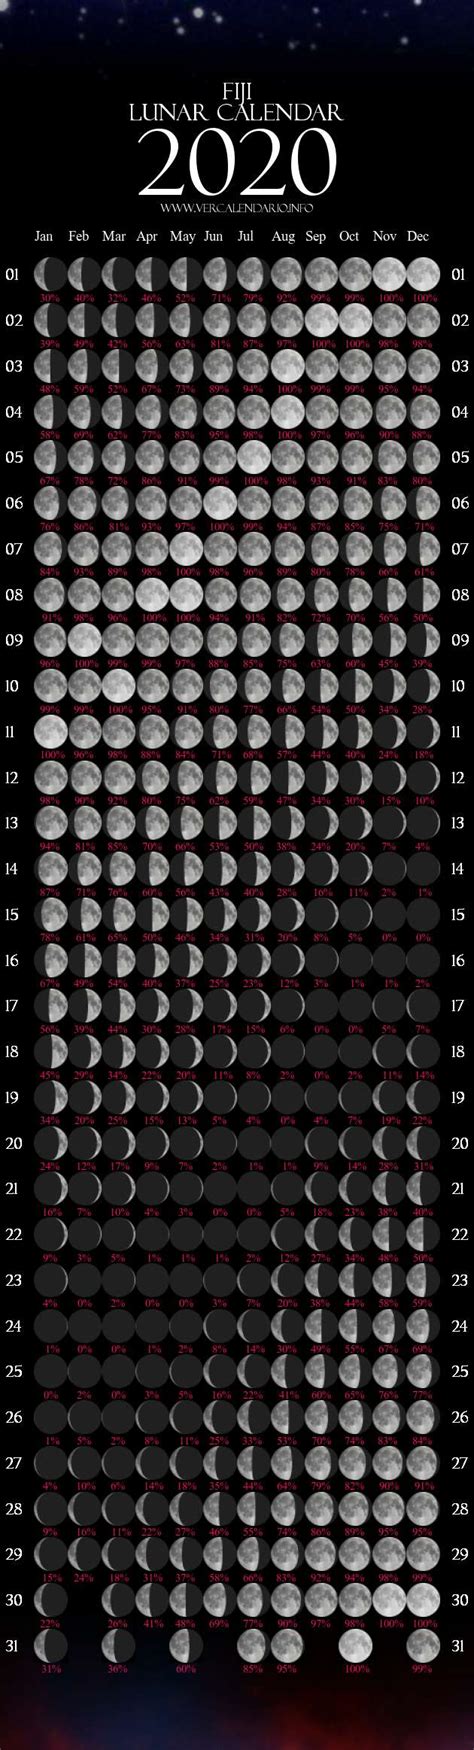 Lunar Calendar 2020 (Fiji)